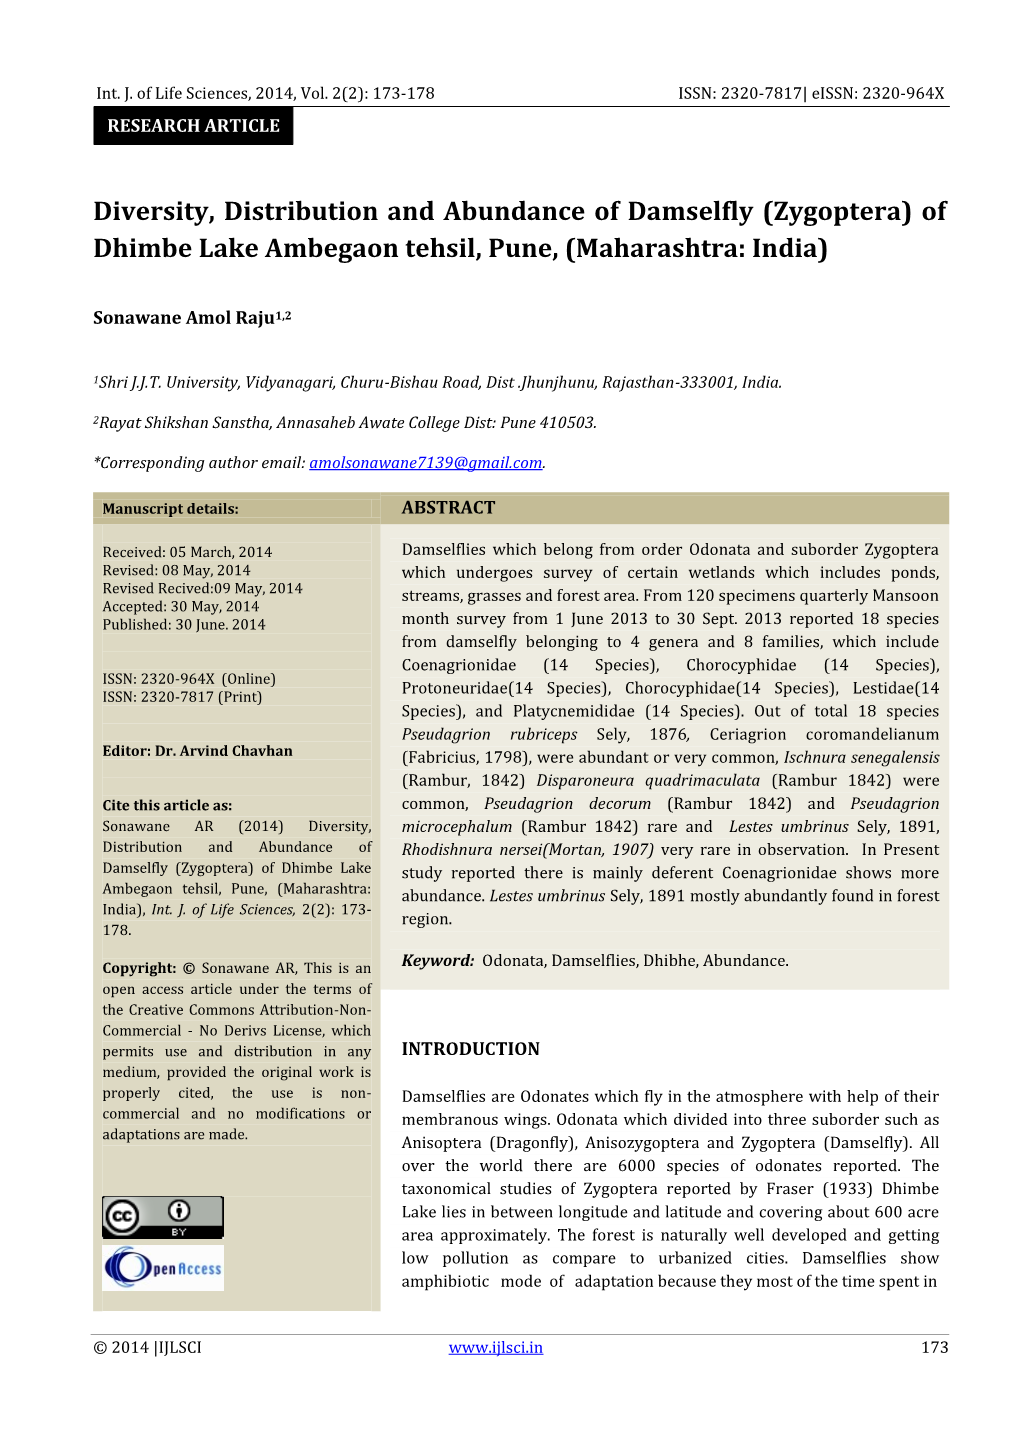 Diversity, Distribution and Abundance of Damselfly (Zygoptera) of Dhimbe Lake Ambegaon Tehsil, Pune, (Maharashtra: India)